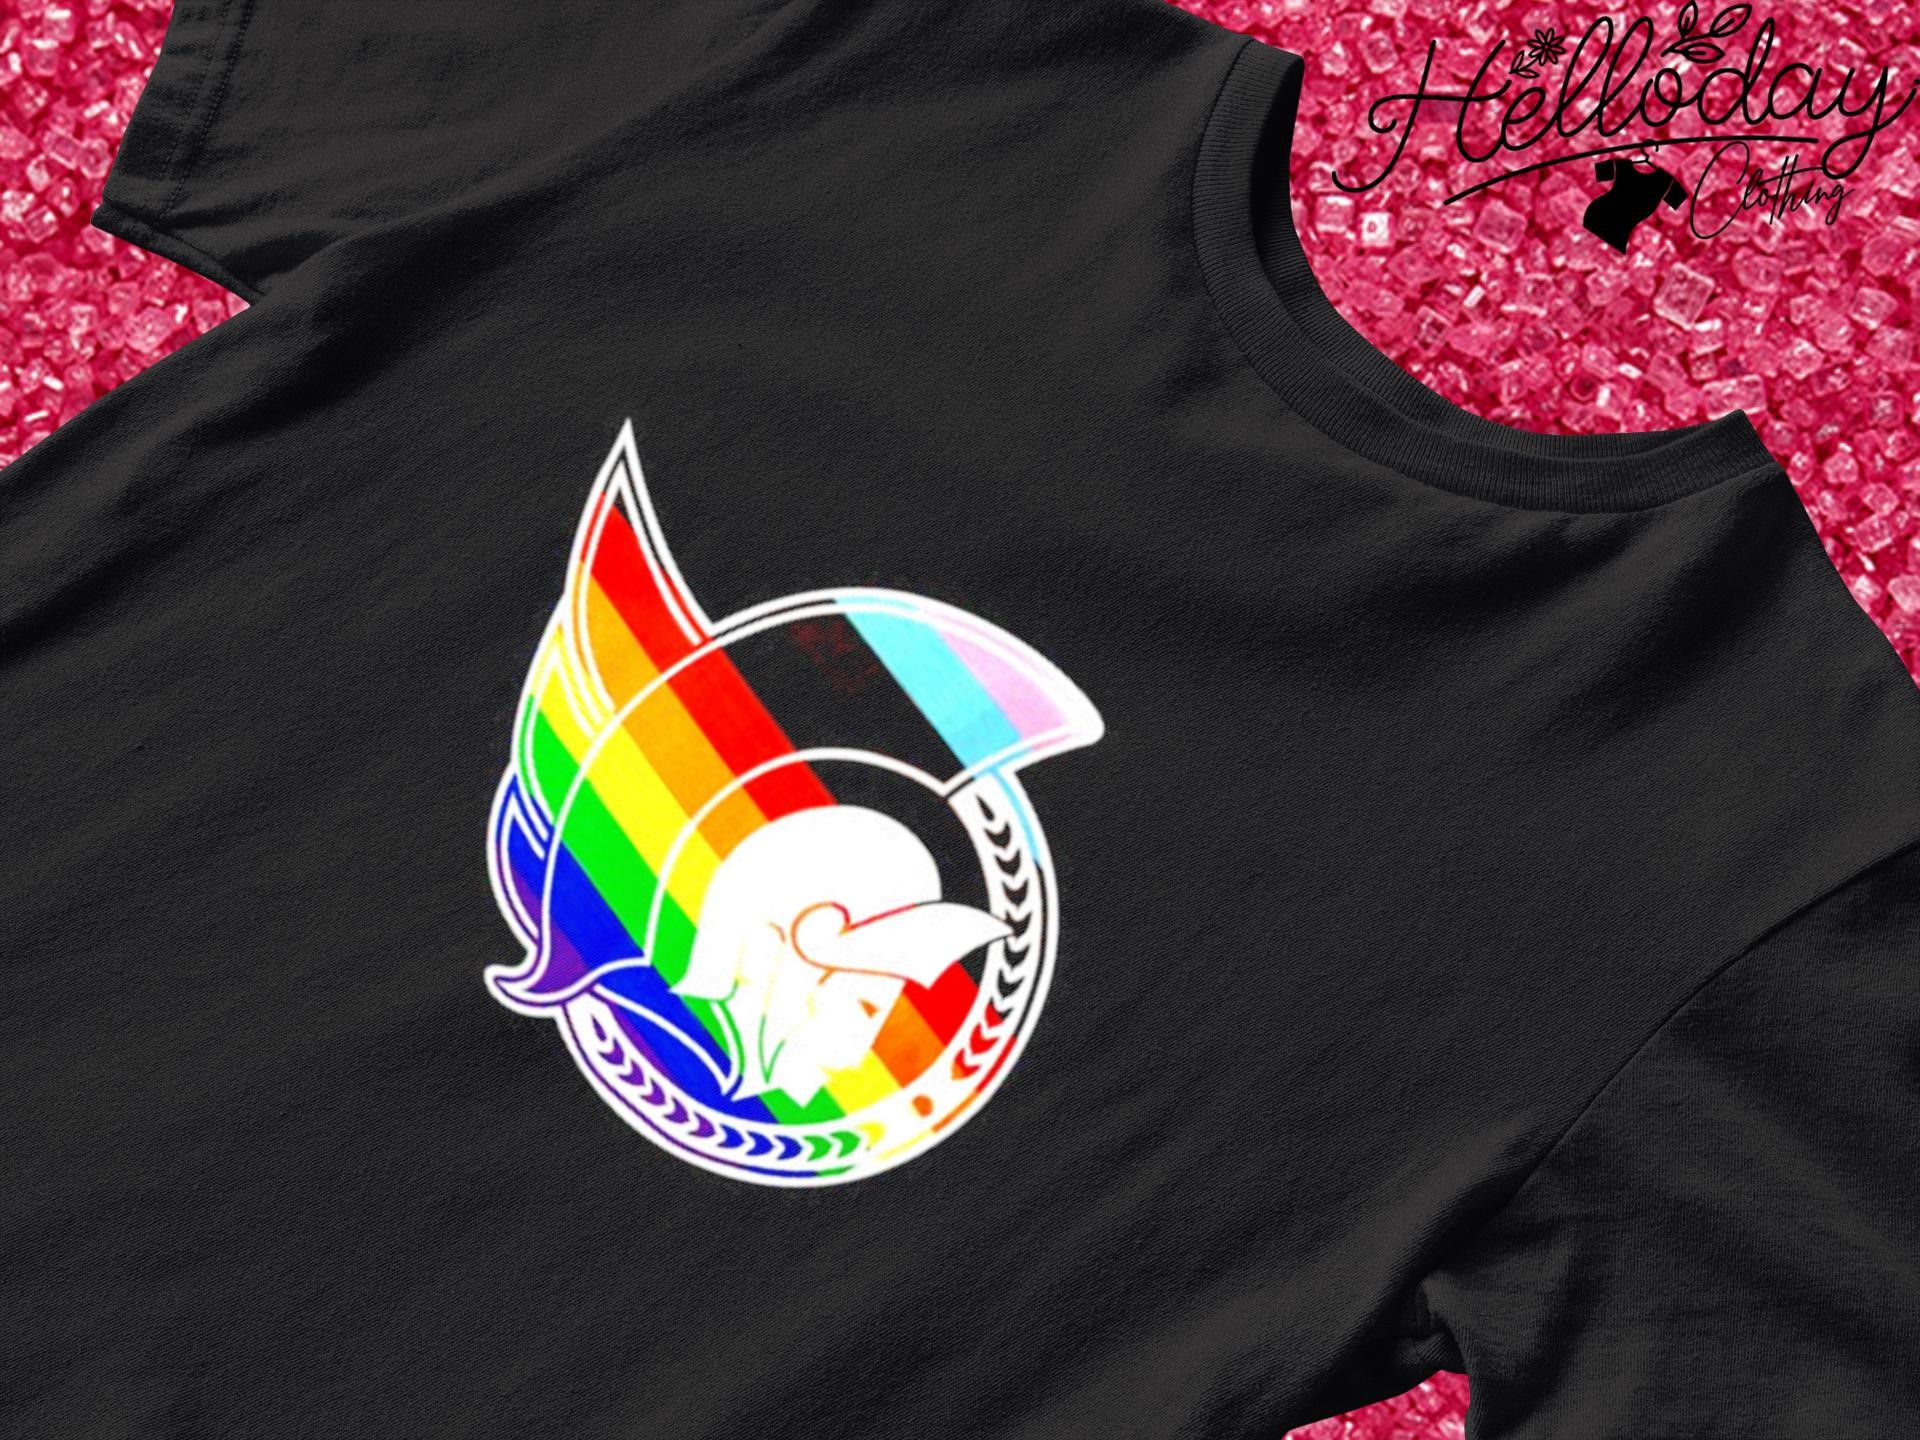 Canadian tire center pride LGBT shirt